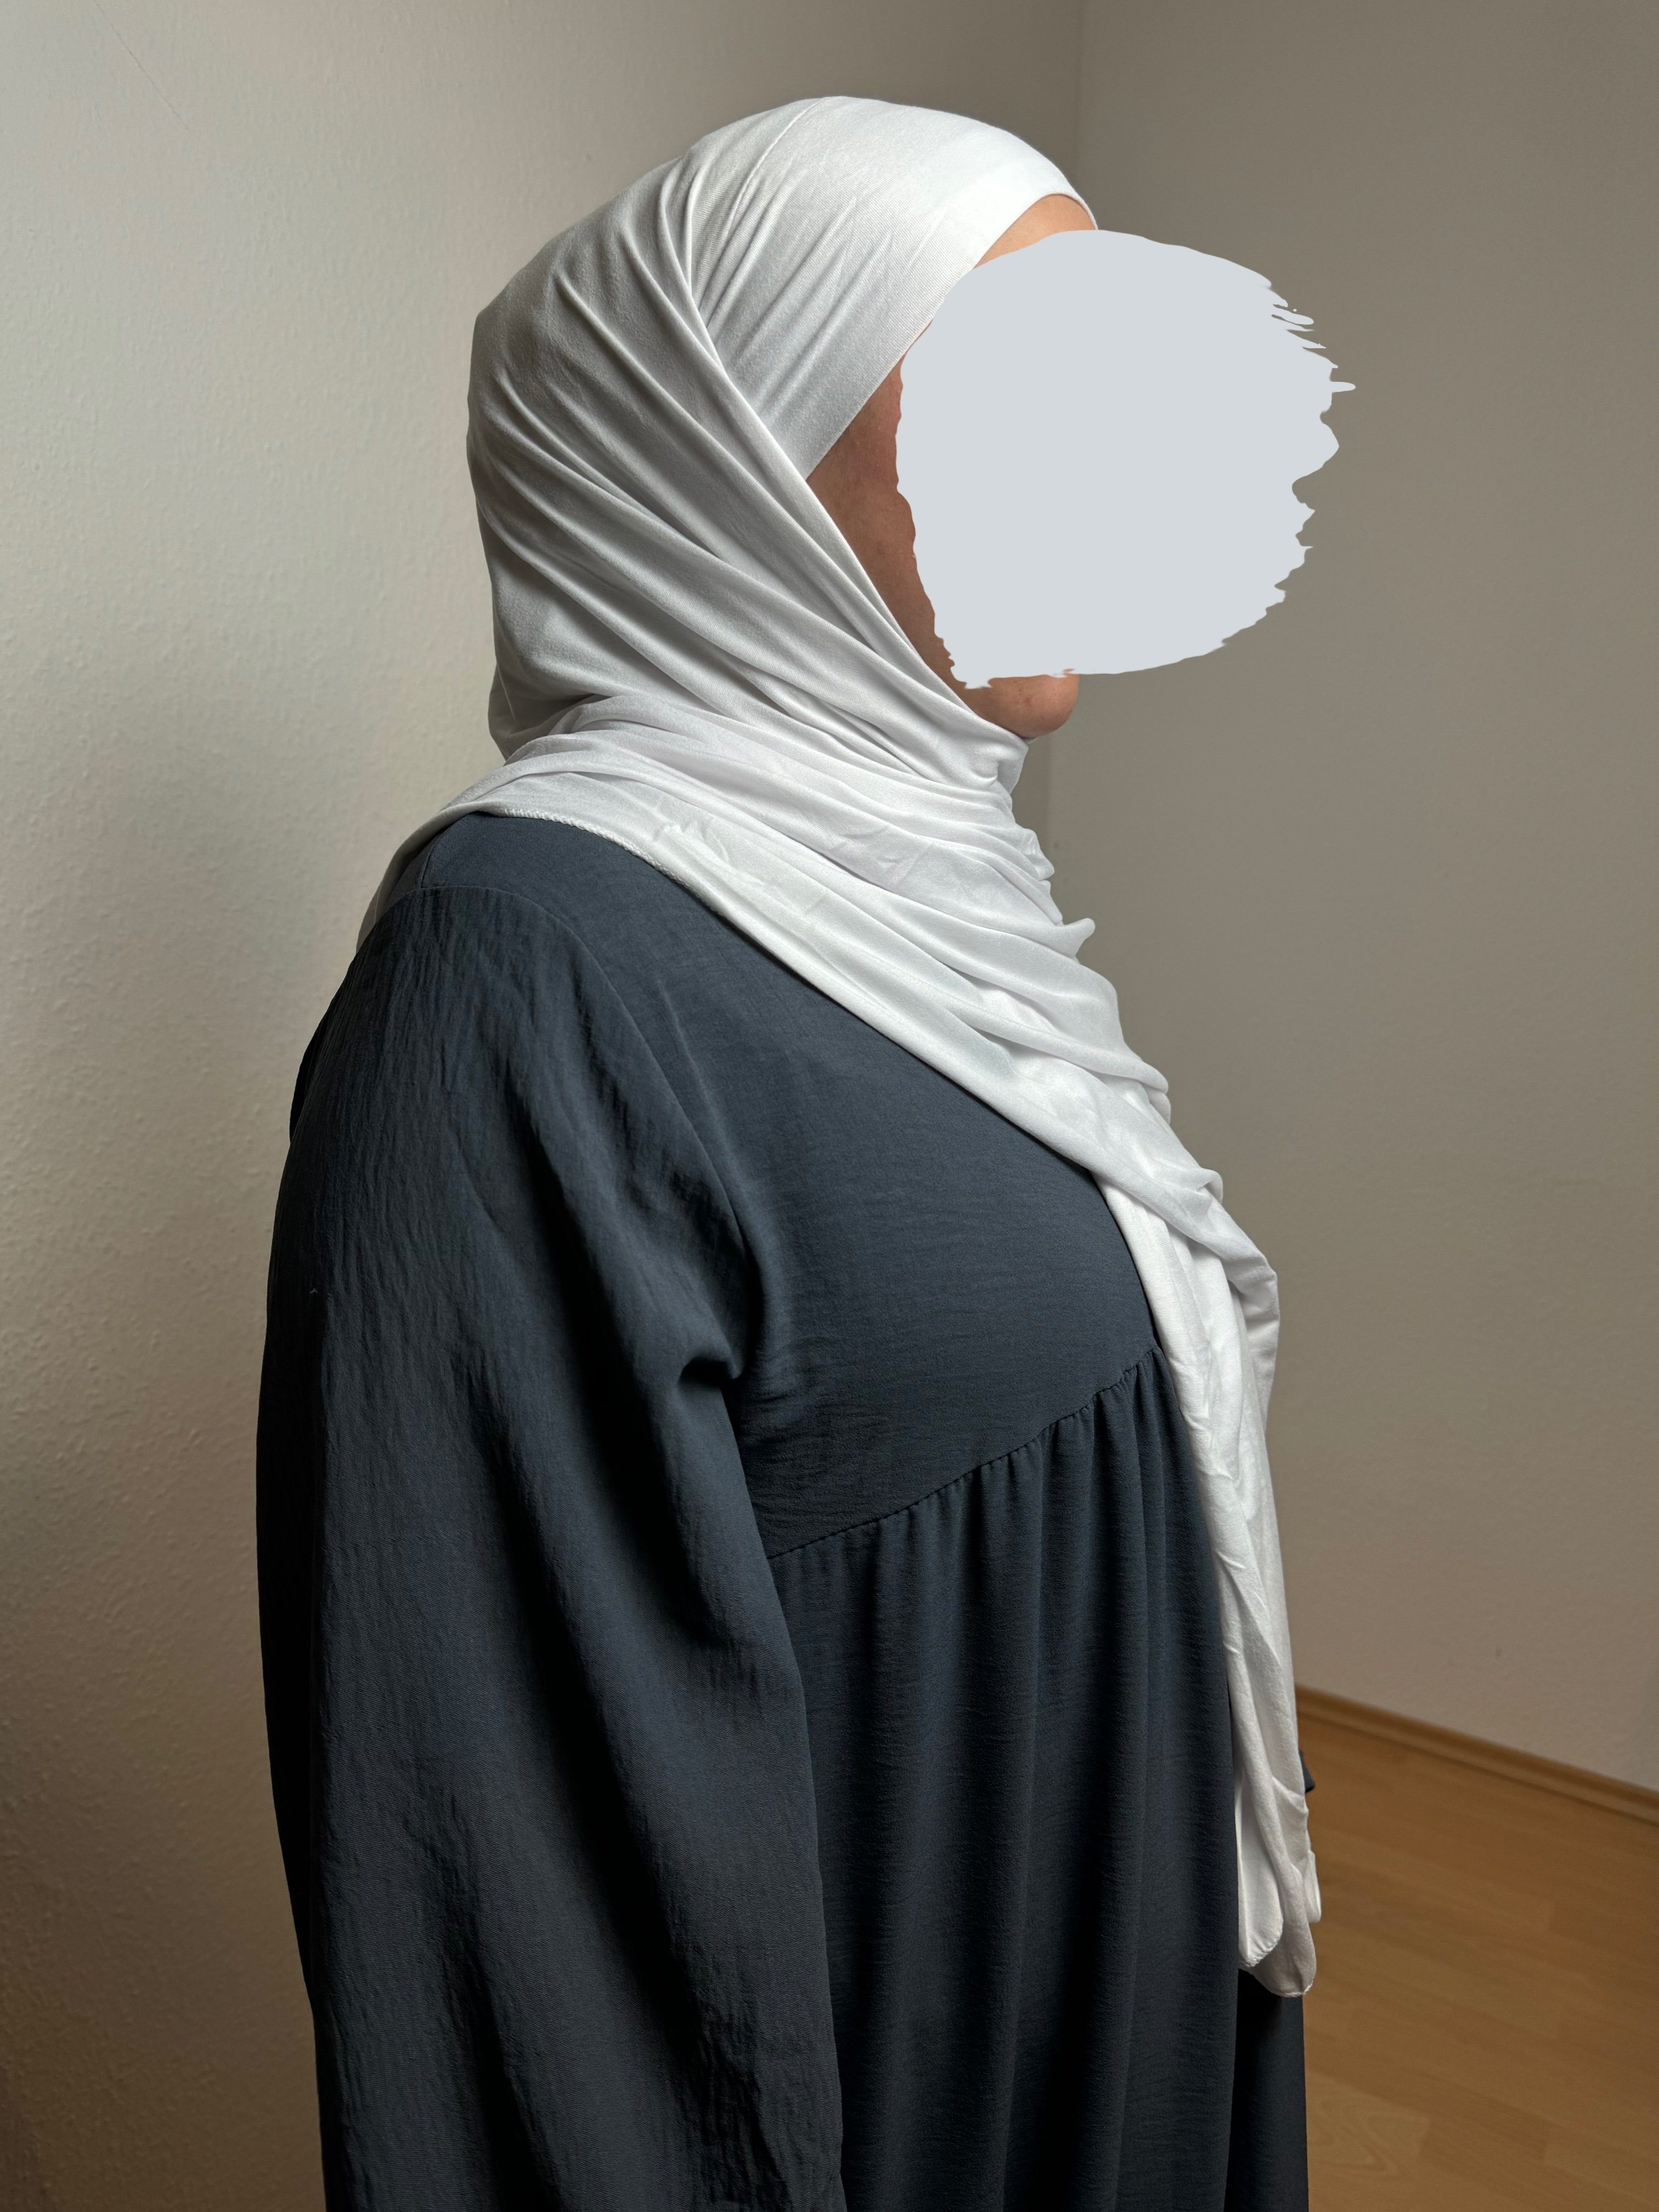 HIJABIFY Hijab Easy Hijab mit integrierter unter Tuch (antirutsch) Jersey-Stoff 2 in 1 Hijab/ Hidschab/ Kopftuch Weiss | Hijab